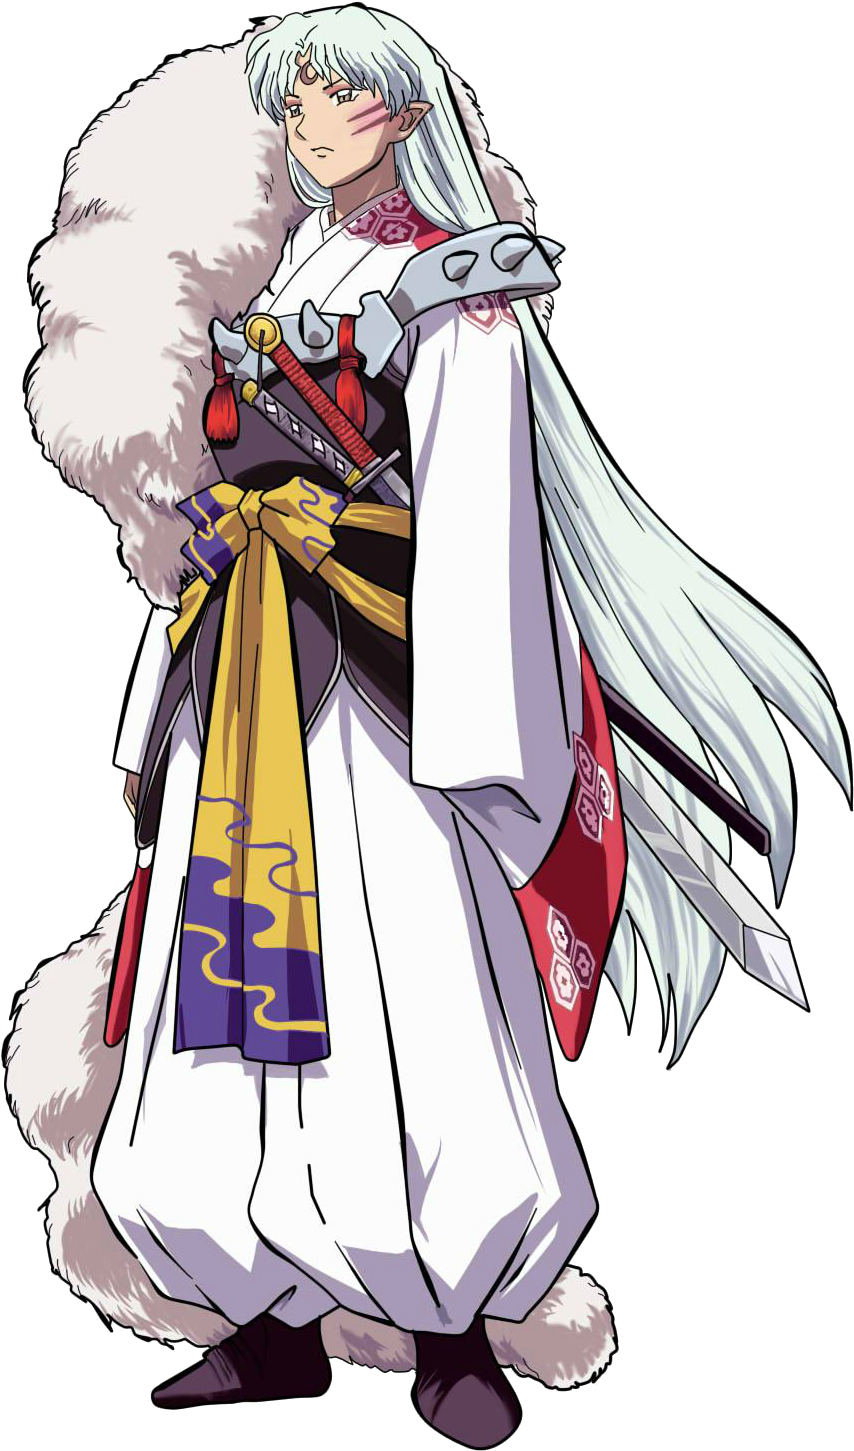 Inuyasha (personaje) - Wikipedia, la enciclopedia libre